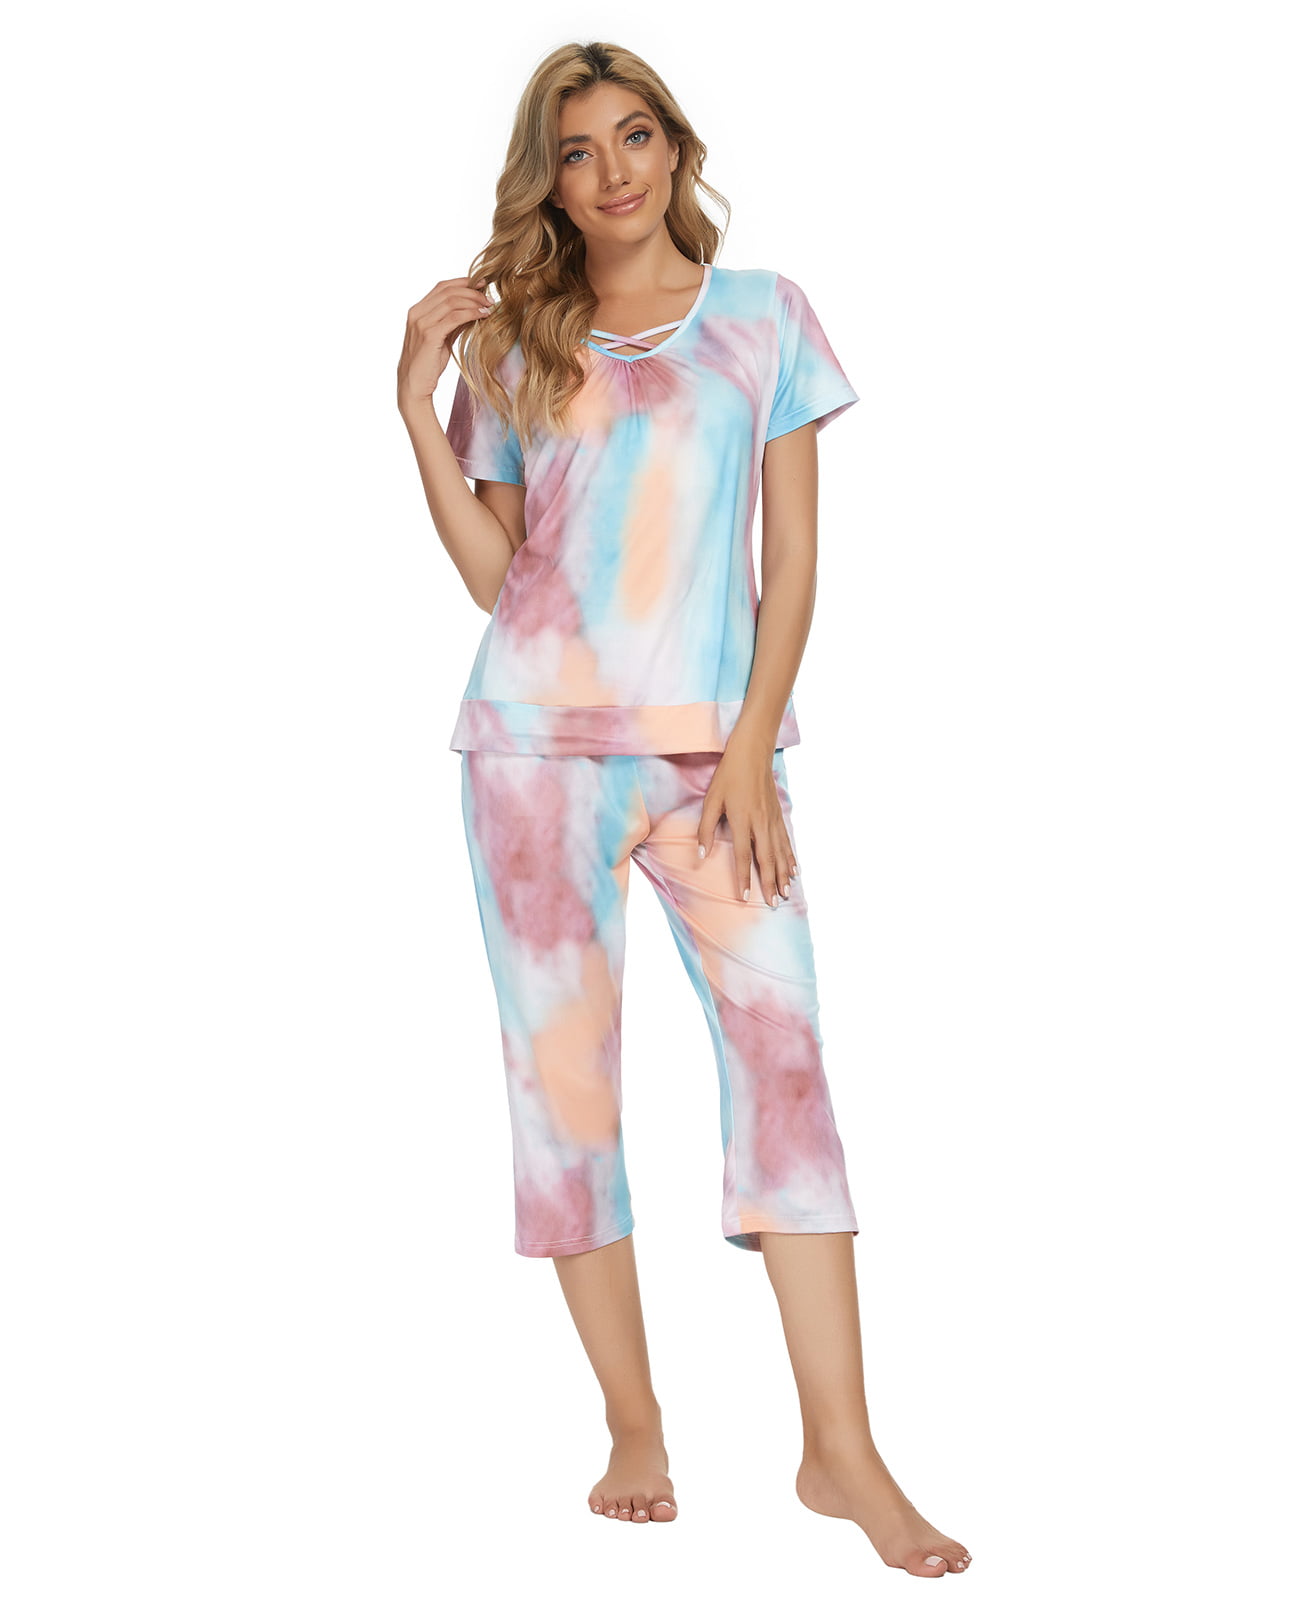 MINTLIMIT Womens Pajama Set Criss Cross V-Neck Short Sleeves Top with Capri Pants Sleepwear Soft Loungewear Pjs Sets with Pockets 